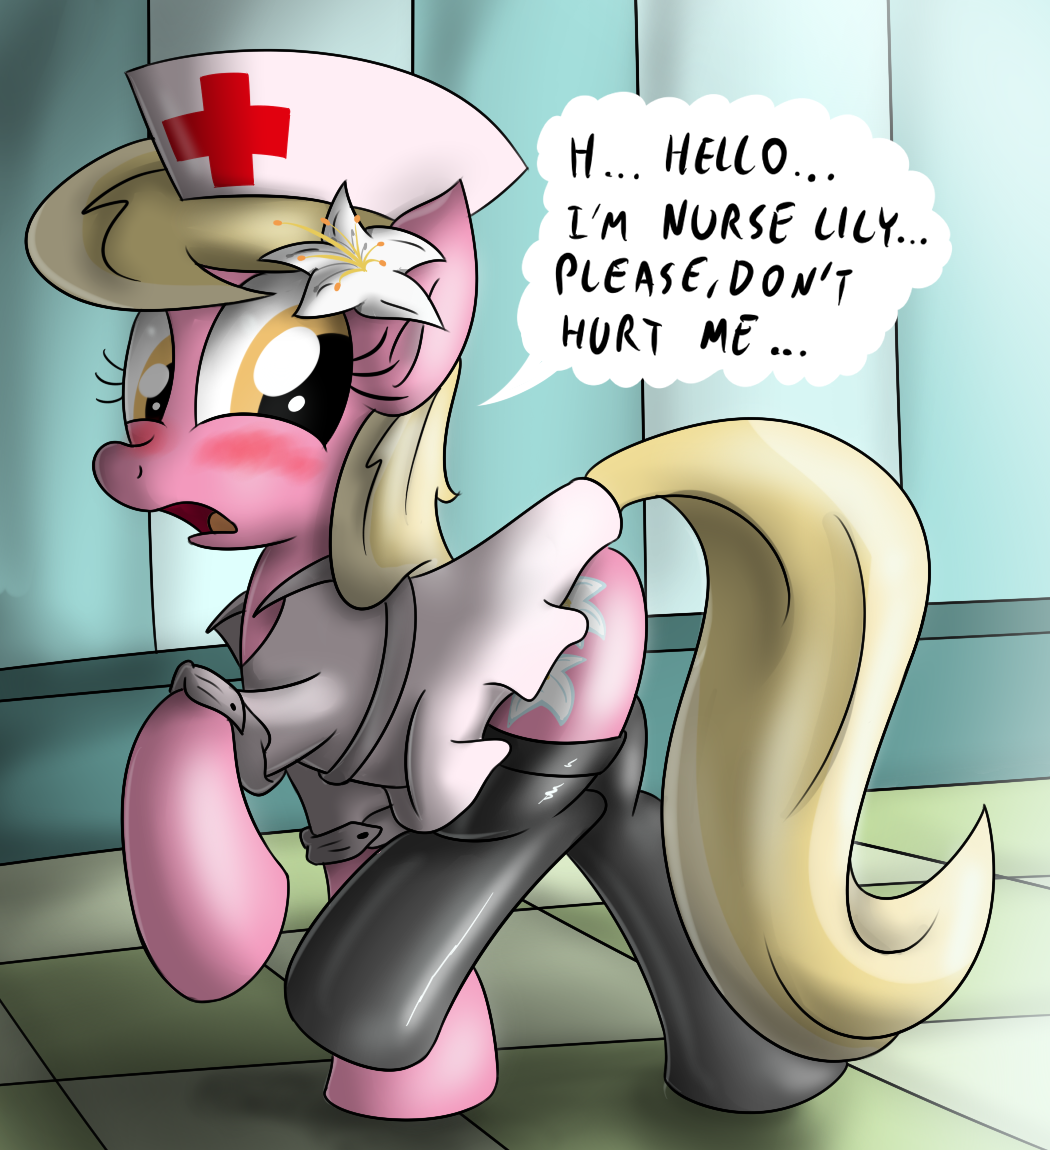 Nurse Lily